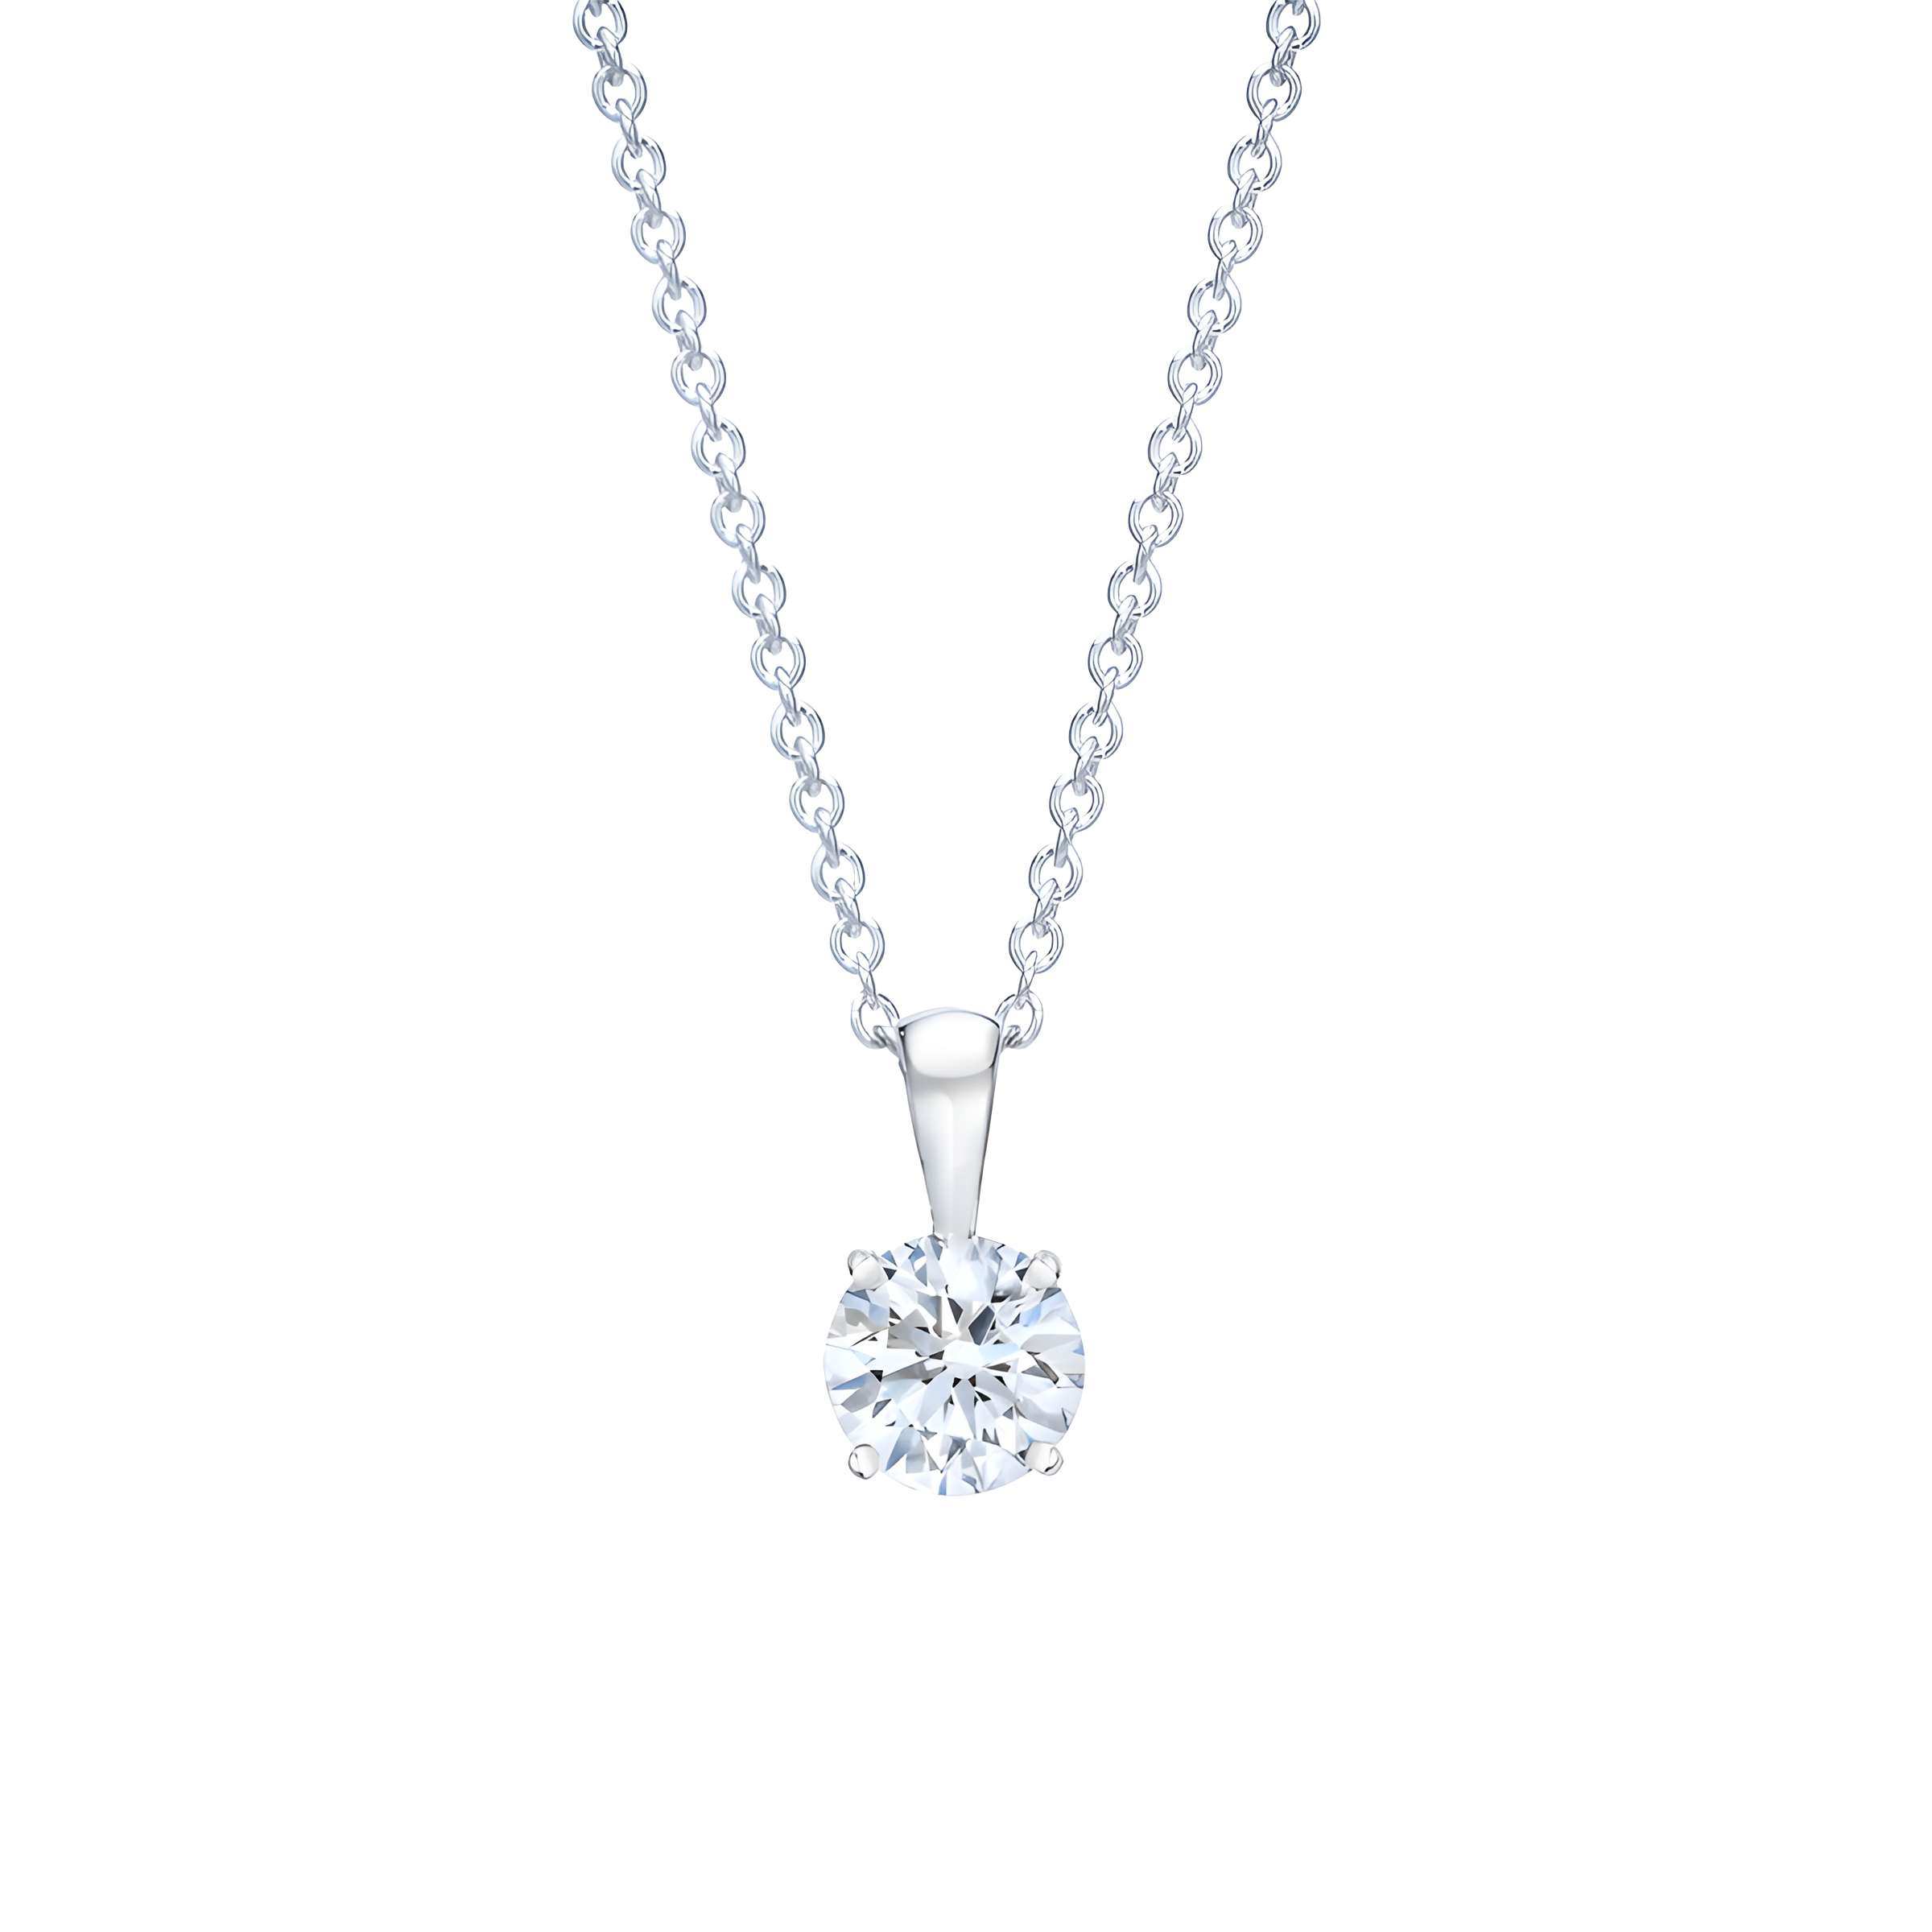 Round Brilliant Solitaire Diamond Pendent Necklace in 18k White Gold